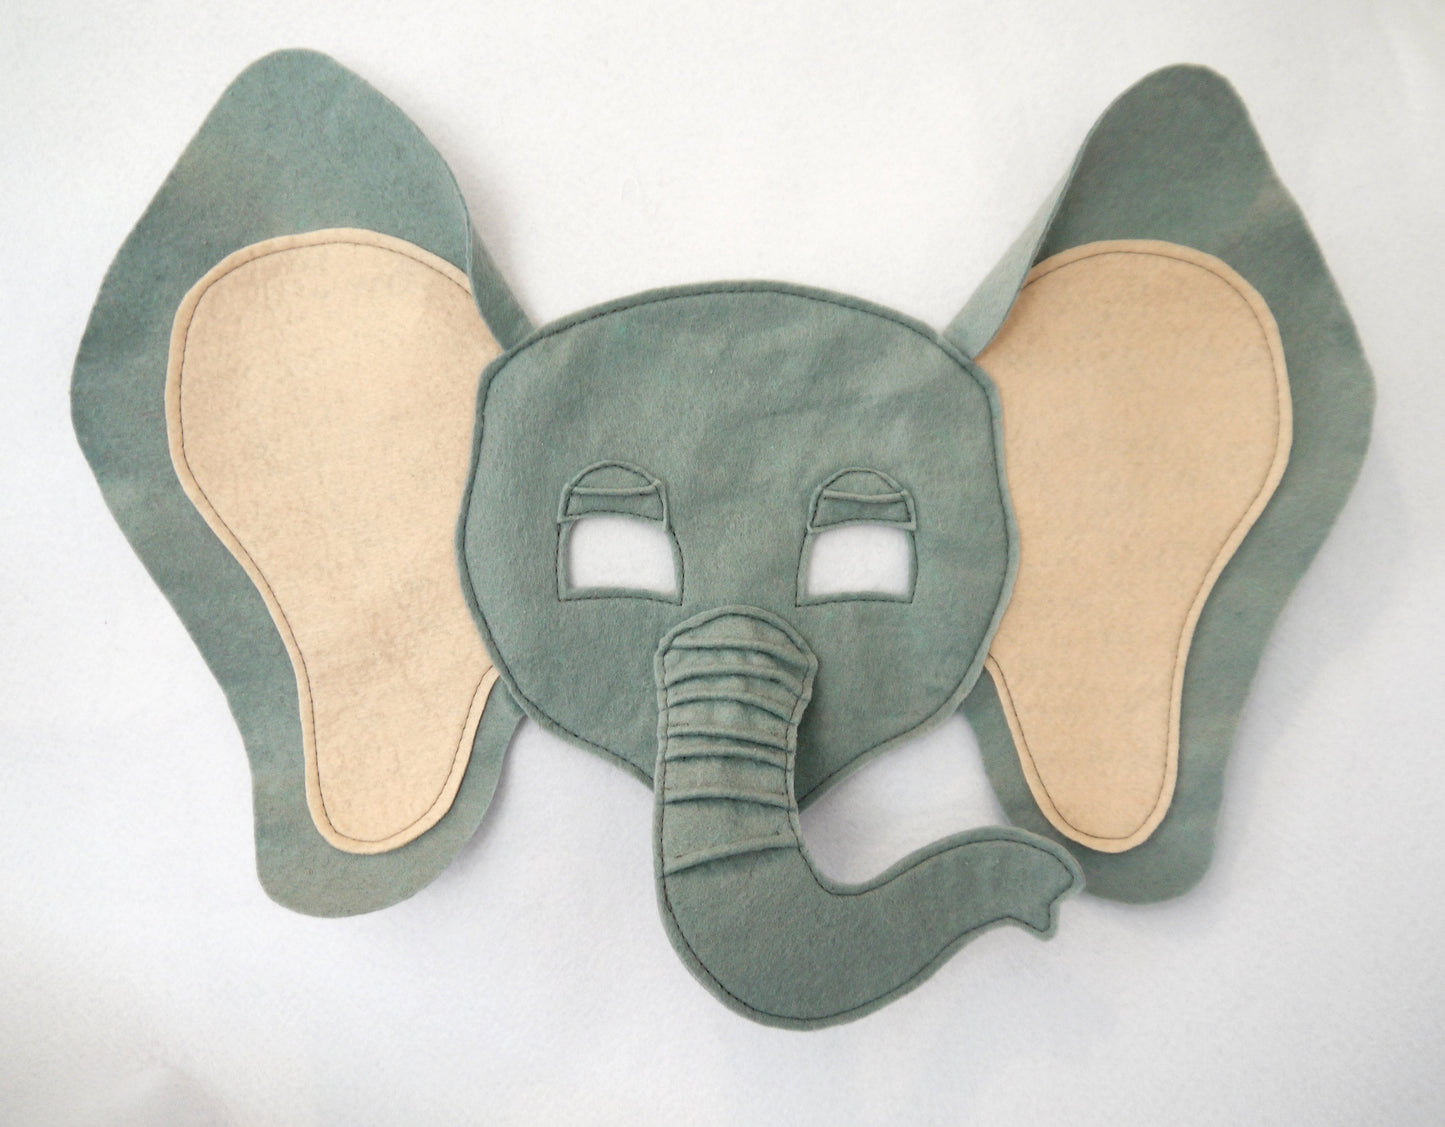 Elephant mask costume book day Birthday children adult gift